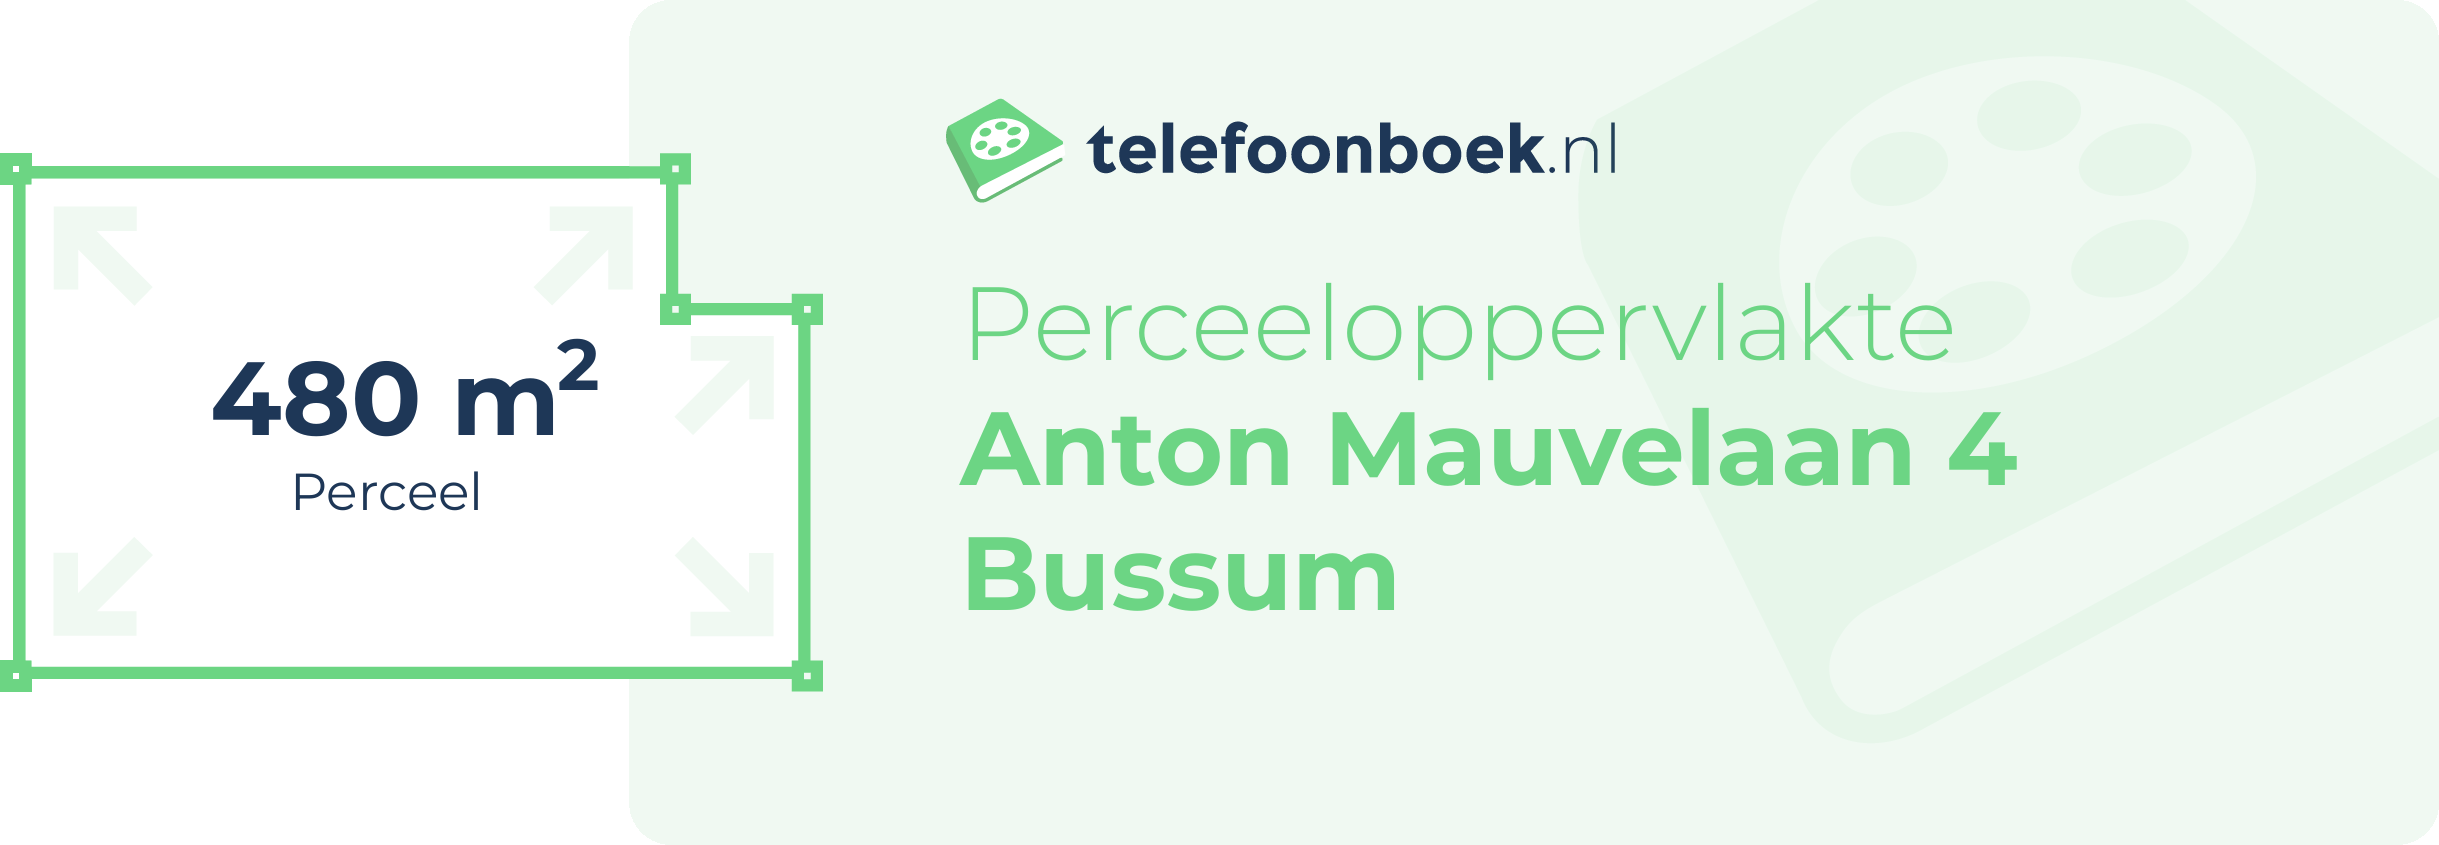 Perceeloppervlakte Anton Mauvelaan 4 Bussum